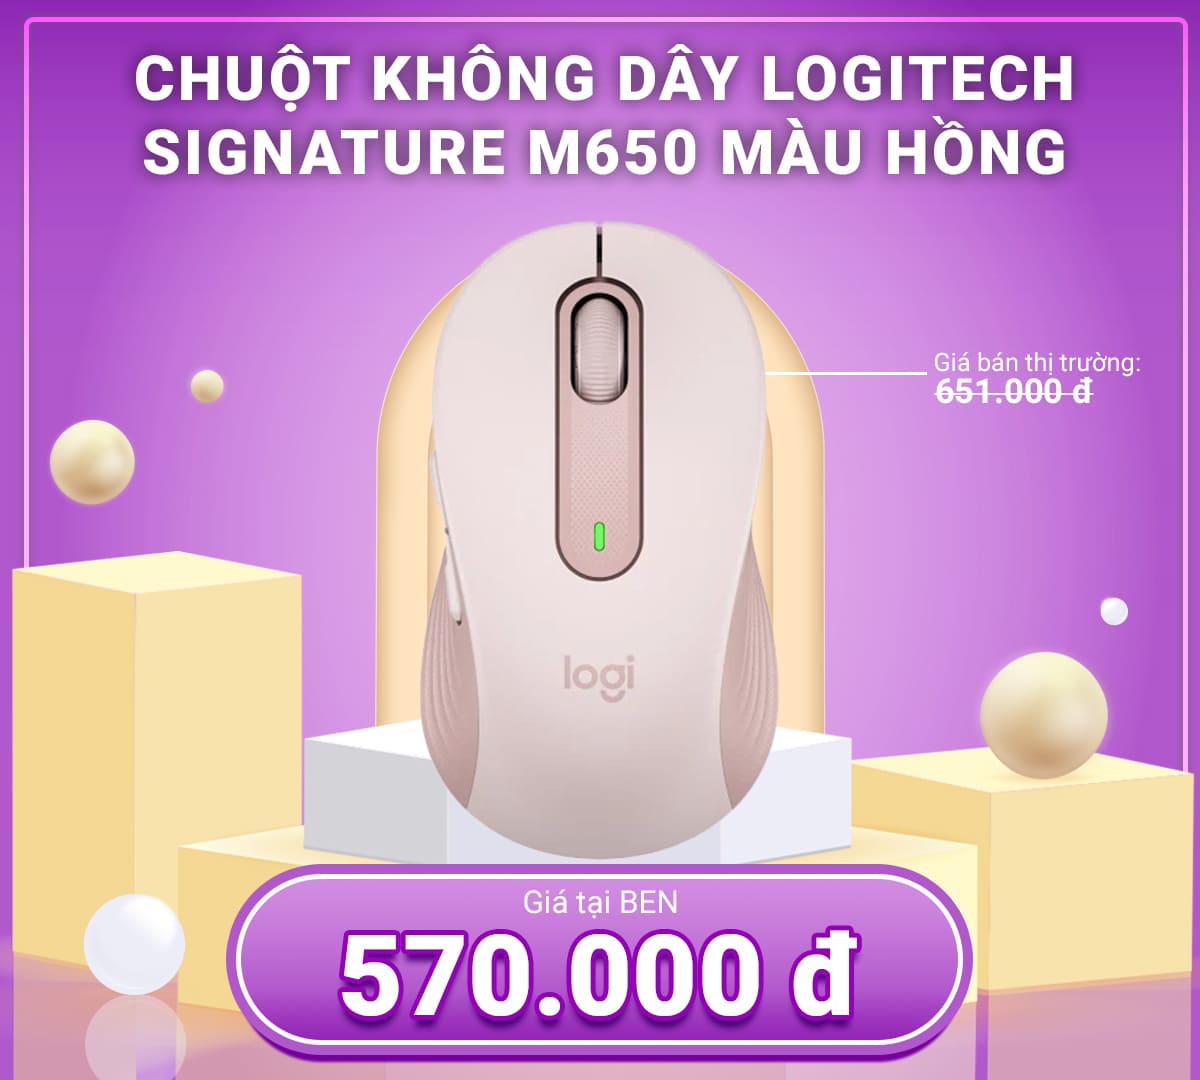 Logic Signature M650 Mau hong